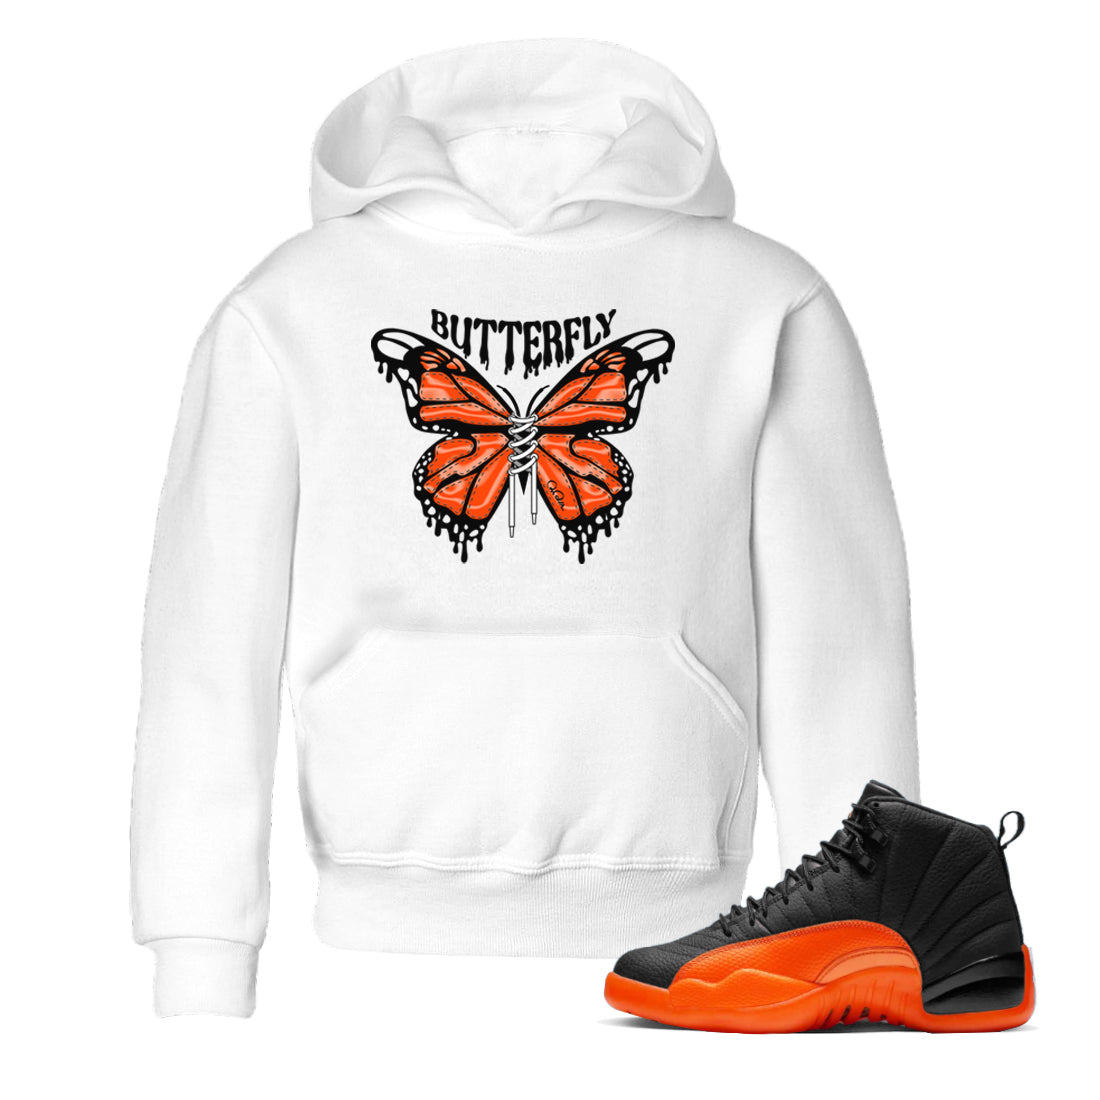 Air Jordan 12 Brilliant Orange Sneaker Match Tees Butterfly Sneaker Tees AJ12 Brilliant Orange Sneaker Release Tees Kids Shirts White 1